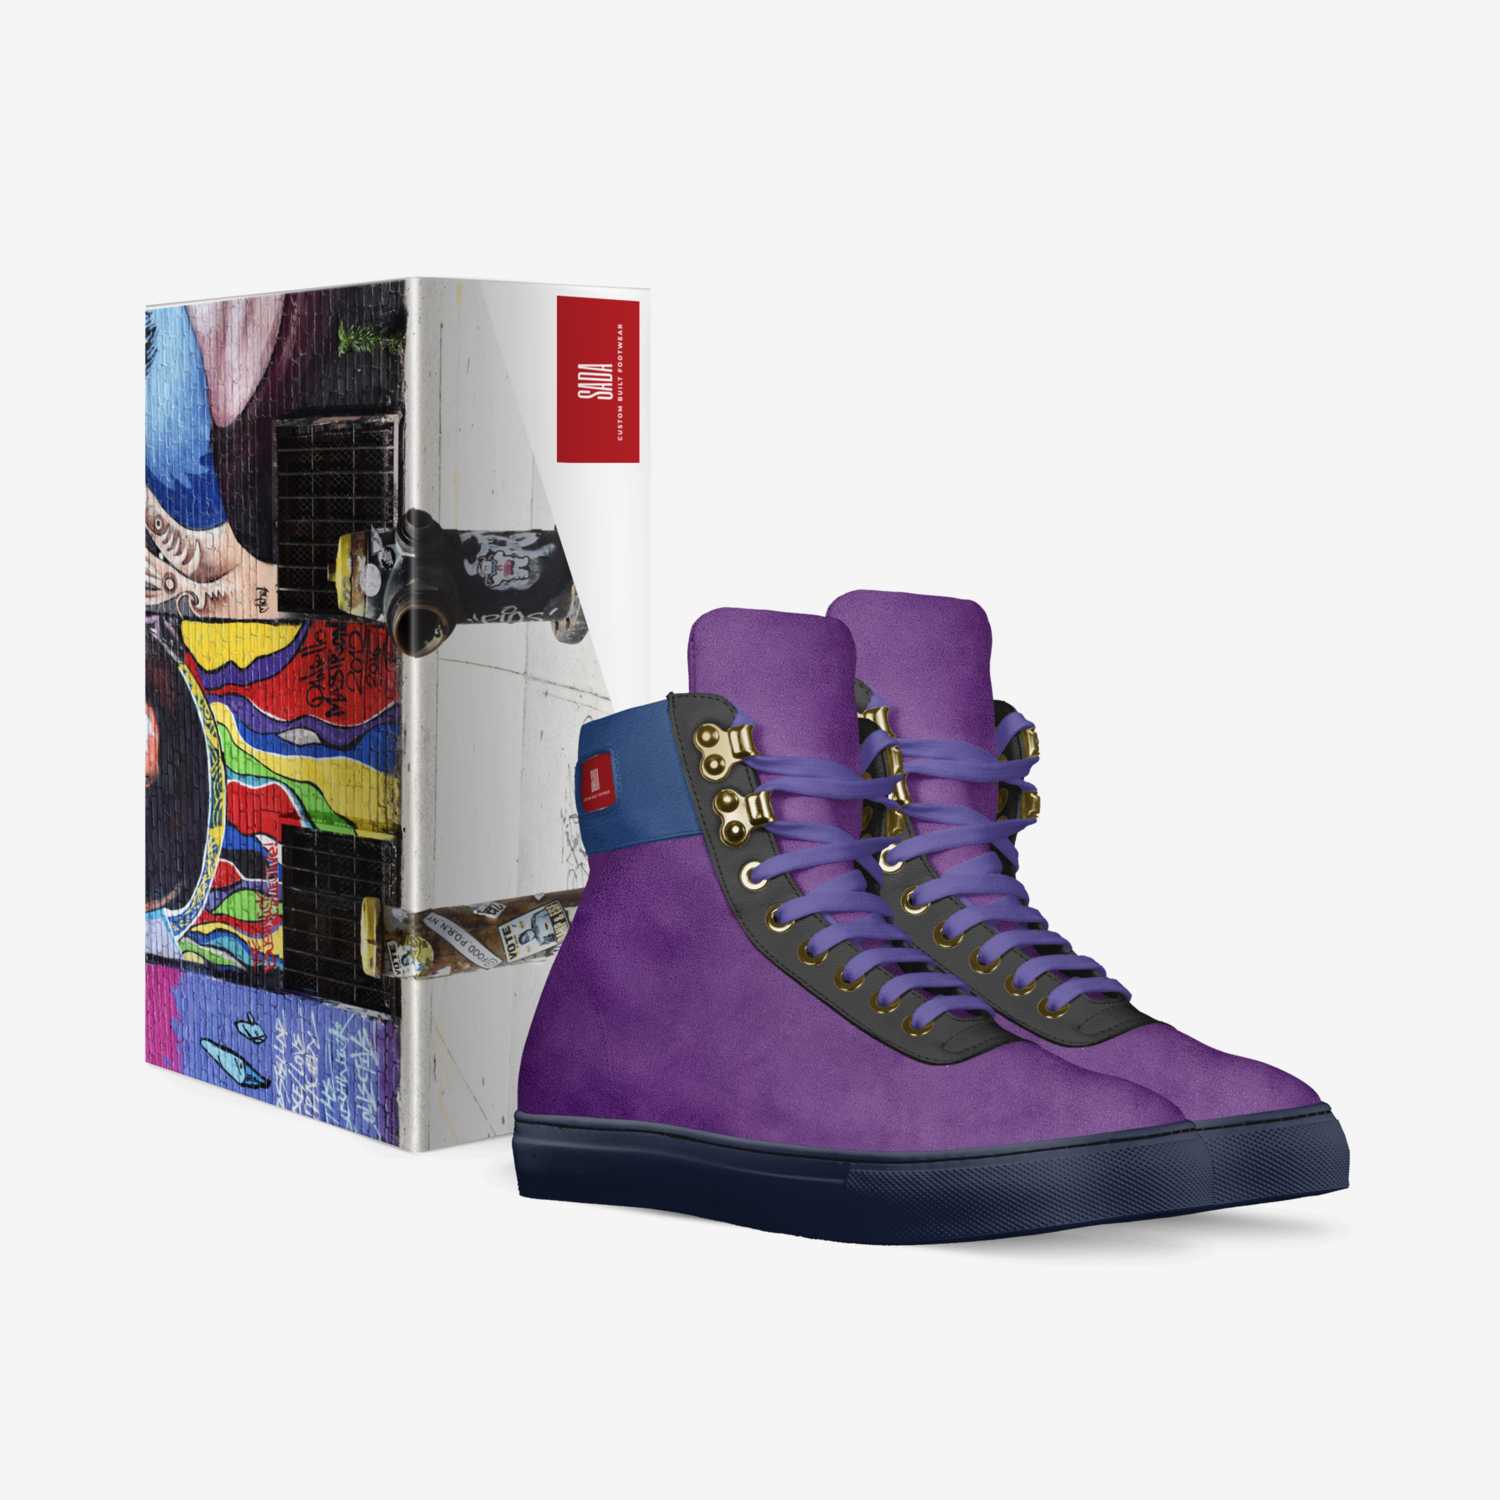 SADA custom made in Italy shoes by Sadé Mcclinton | Box view